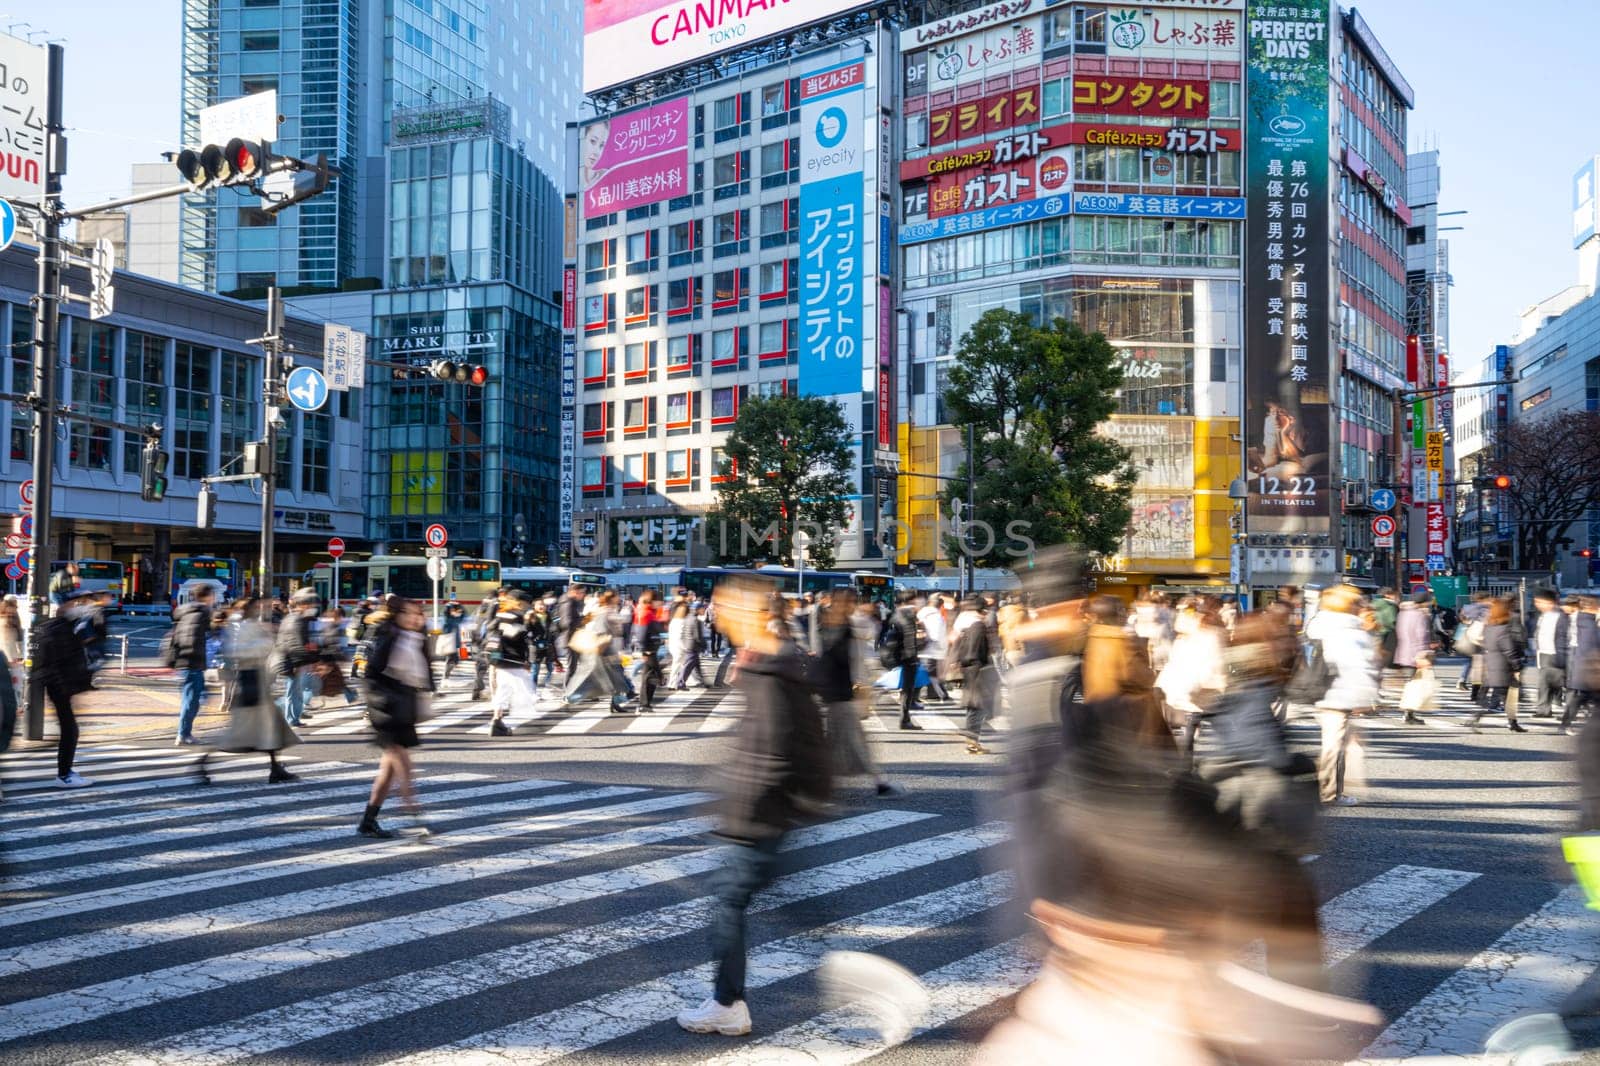  Shibuya Scramble Crossing in Tokyo, Japan by sergiodv